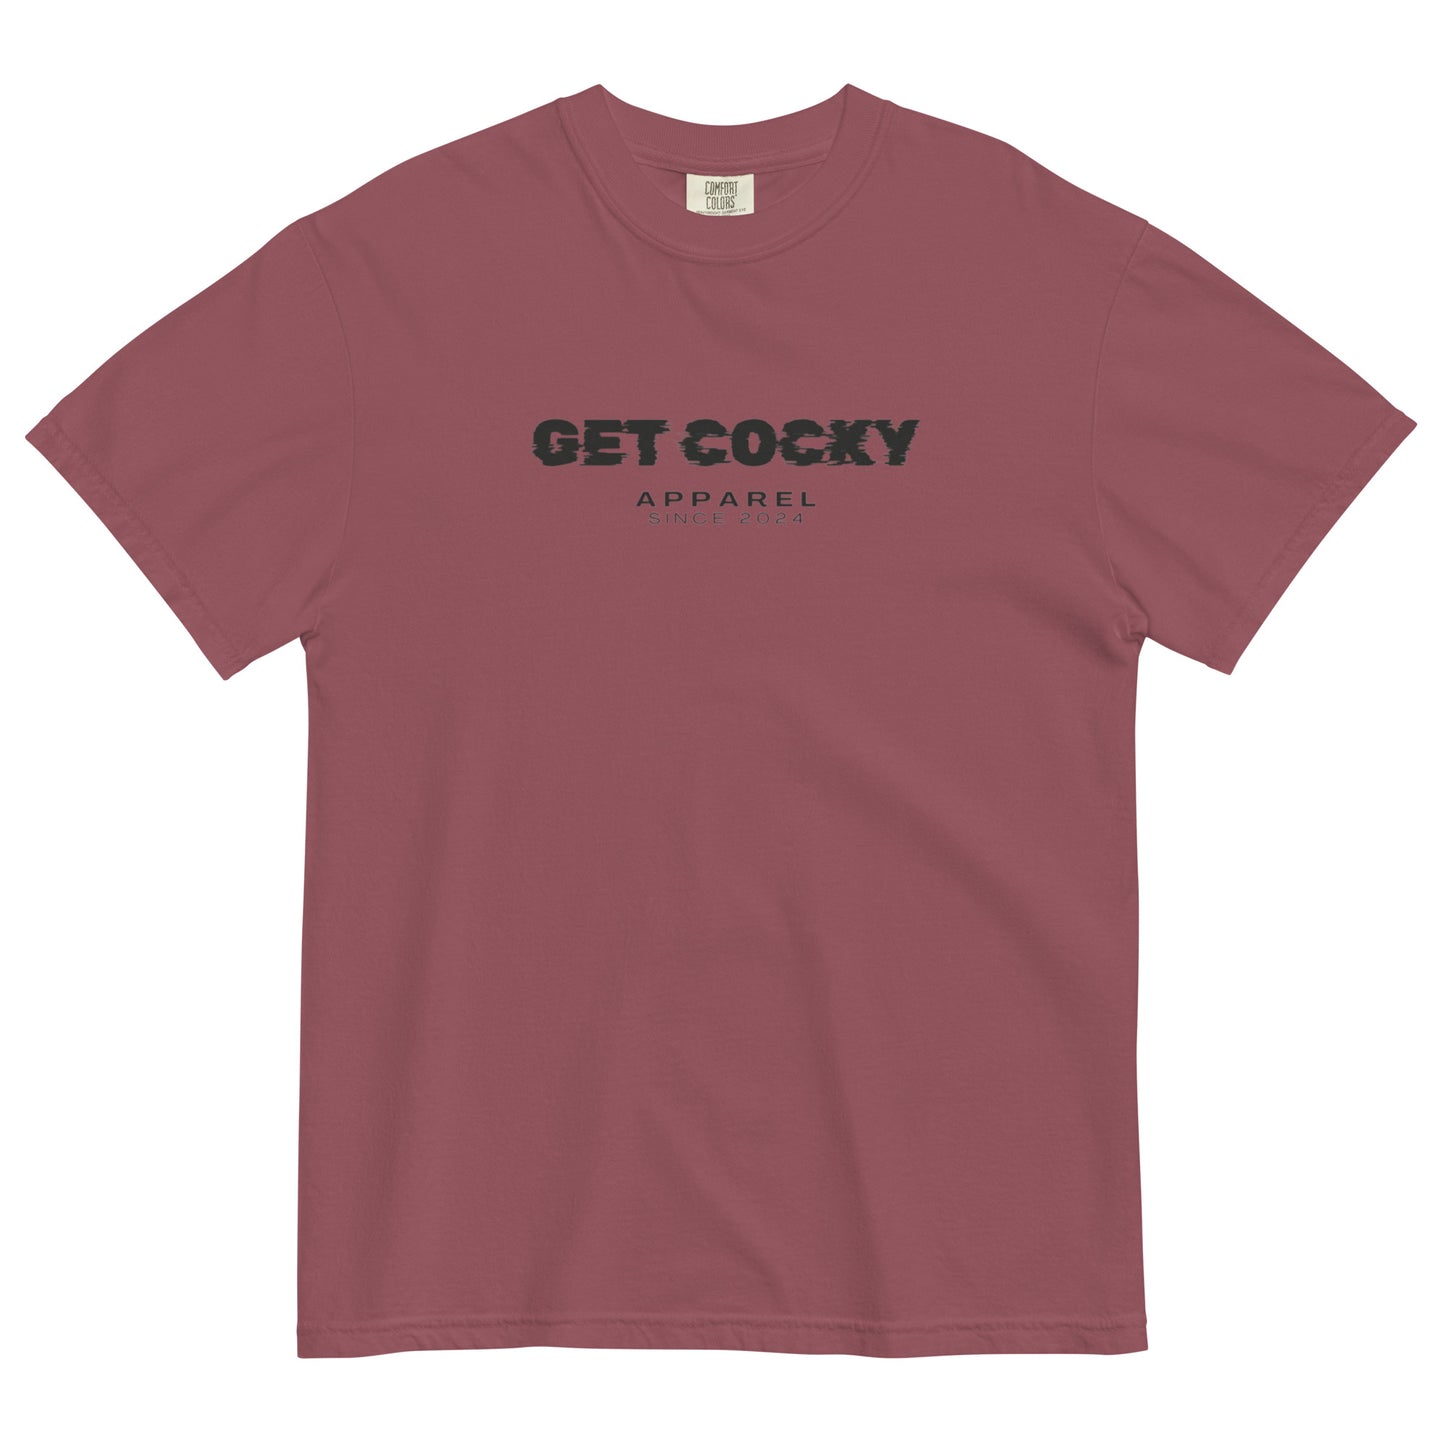 Get Cocky Apparel Tee